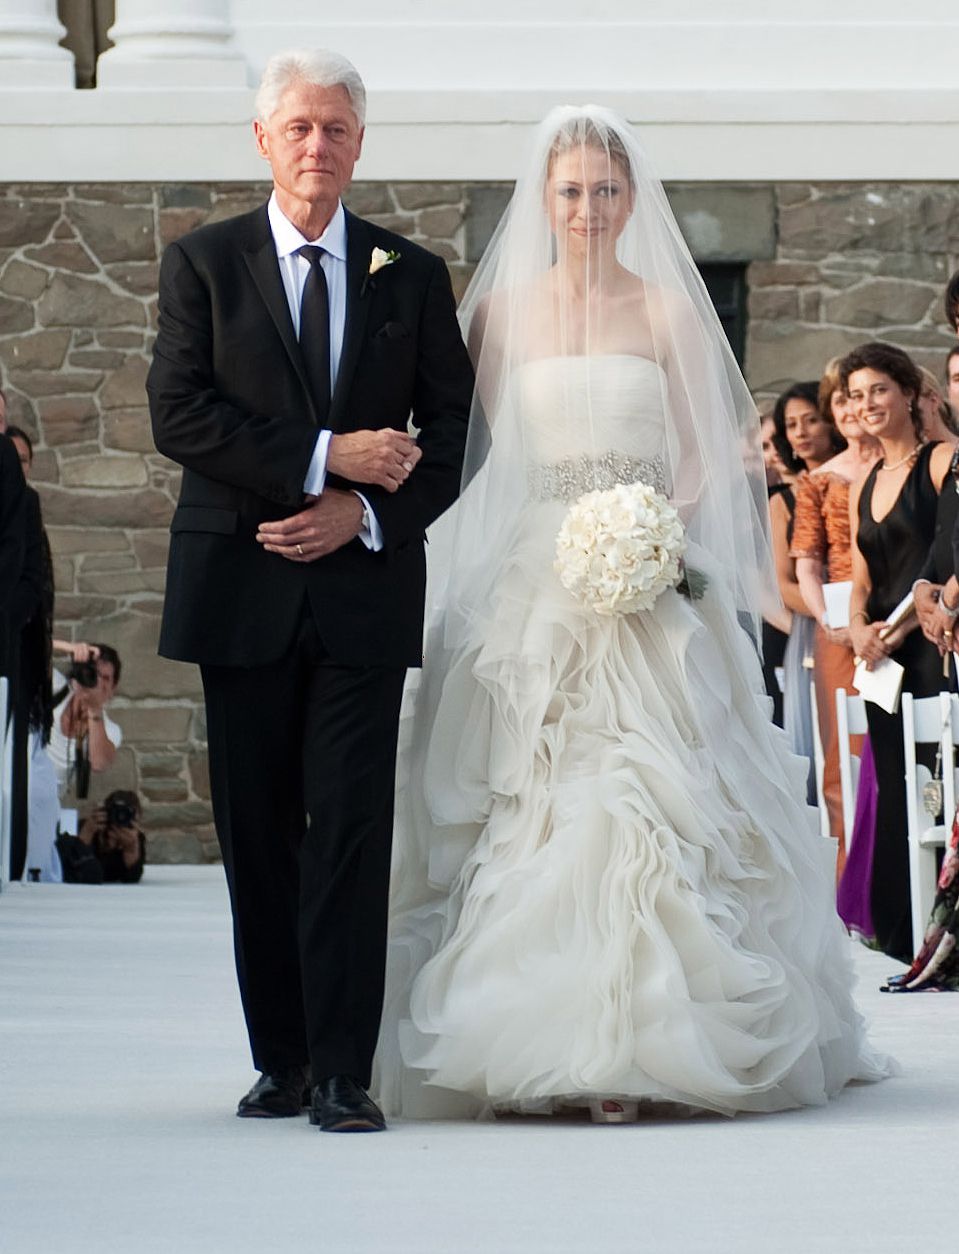 former U.S. President Bill Clinton (L) walks Chelsea Clinton down the aisle during her wedding to Marc Mezvinsky